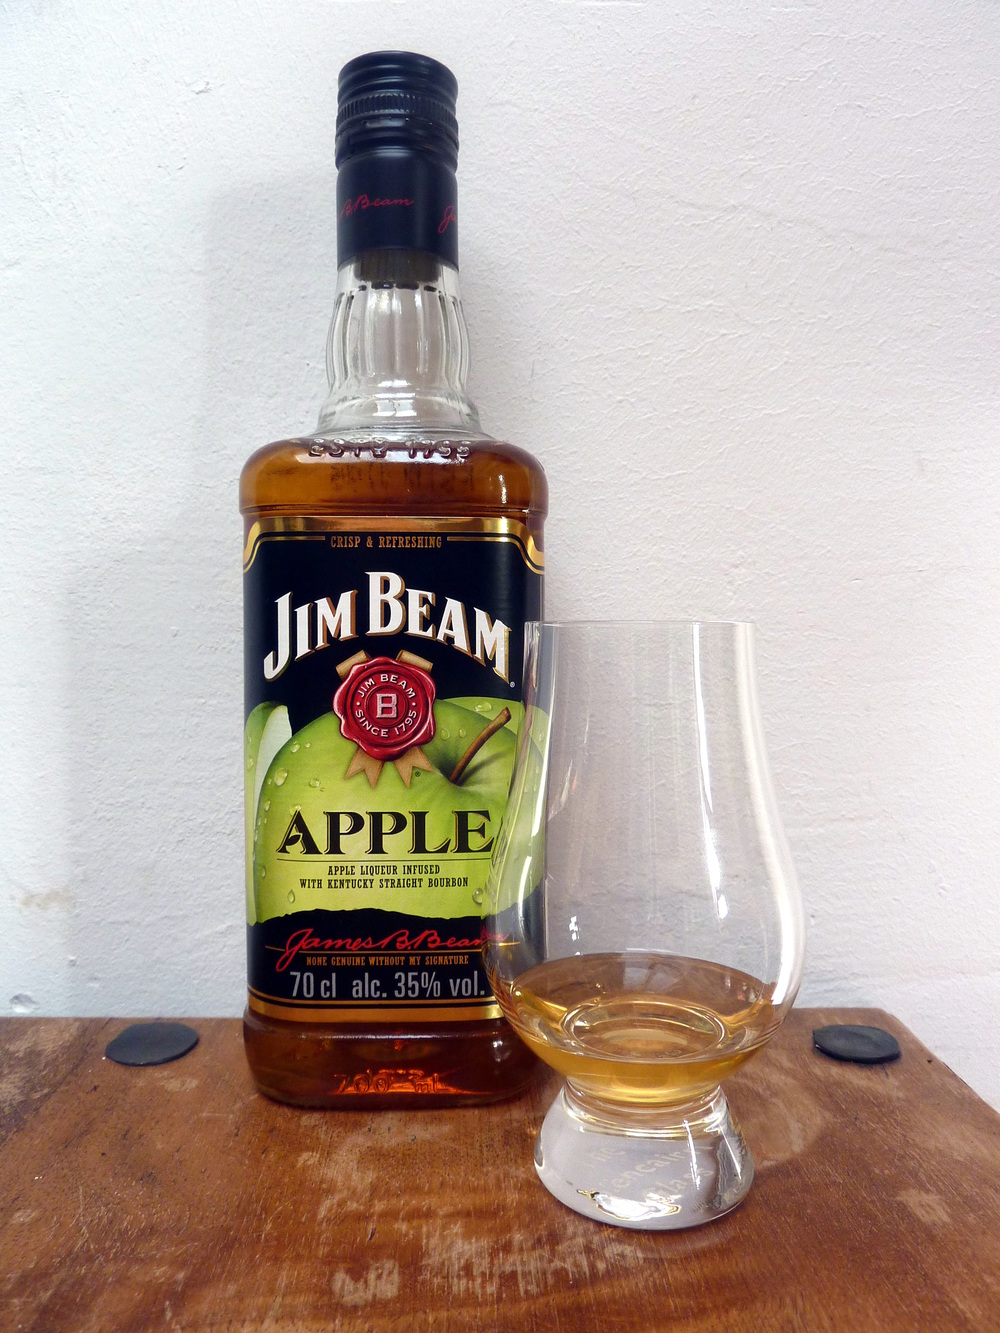 Im Test: Jim Beam Apple (35% Alk.) - Fuselkönig